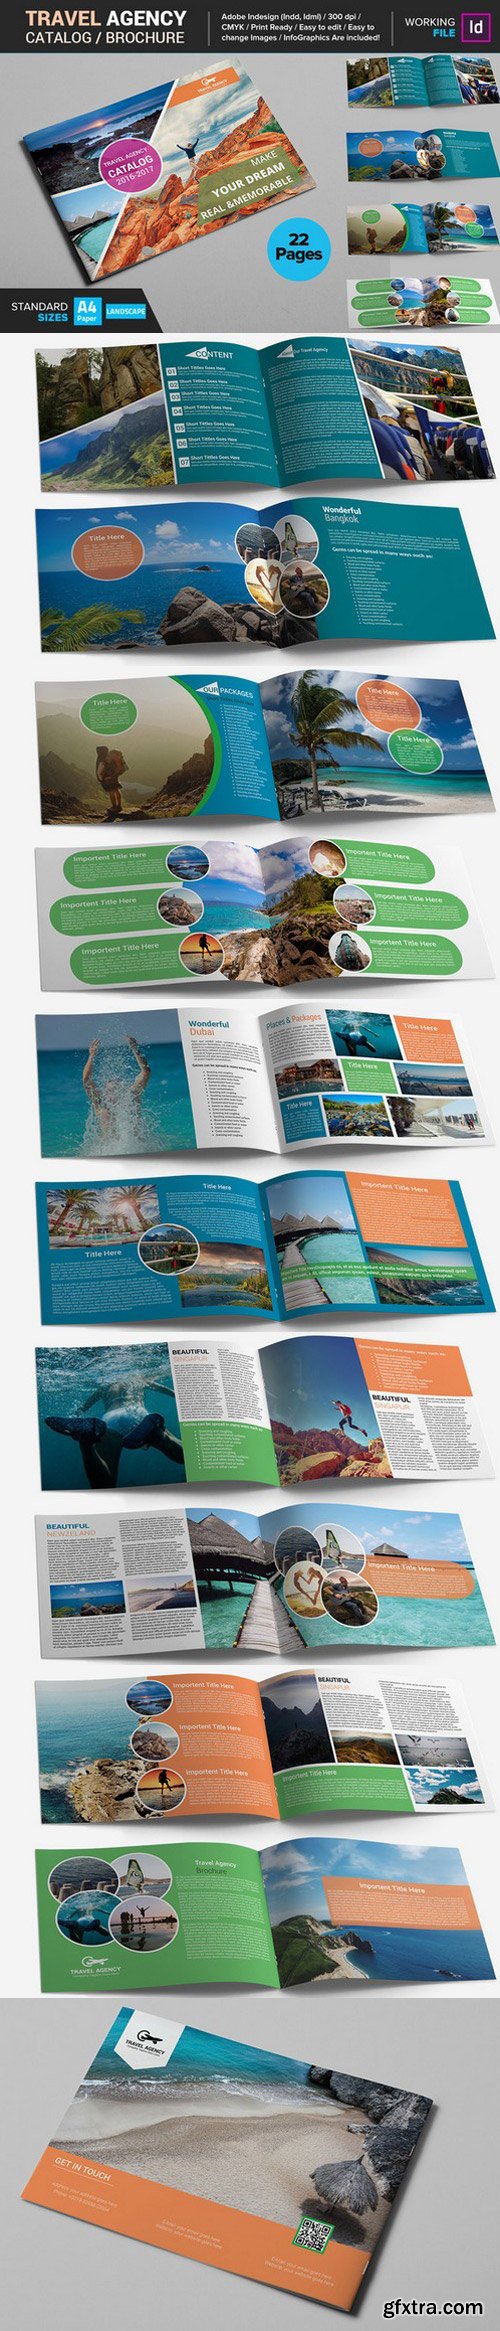 CM - Travel Agency Catalog / Brochure 549649